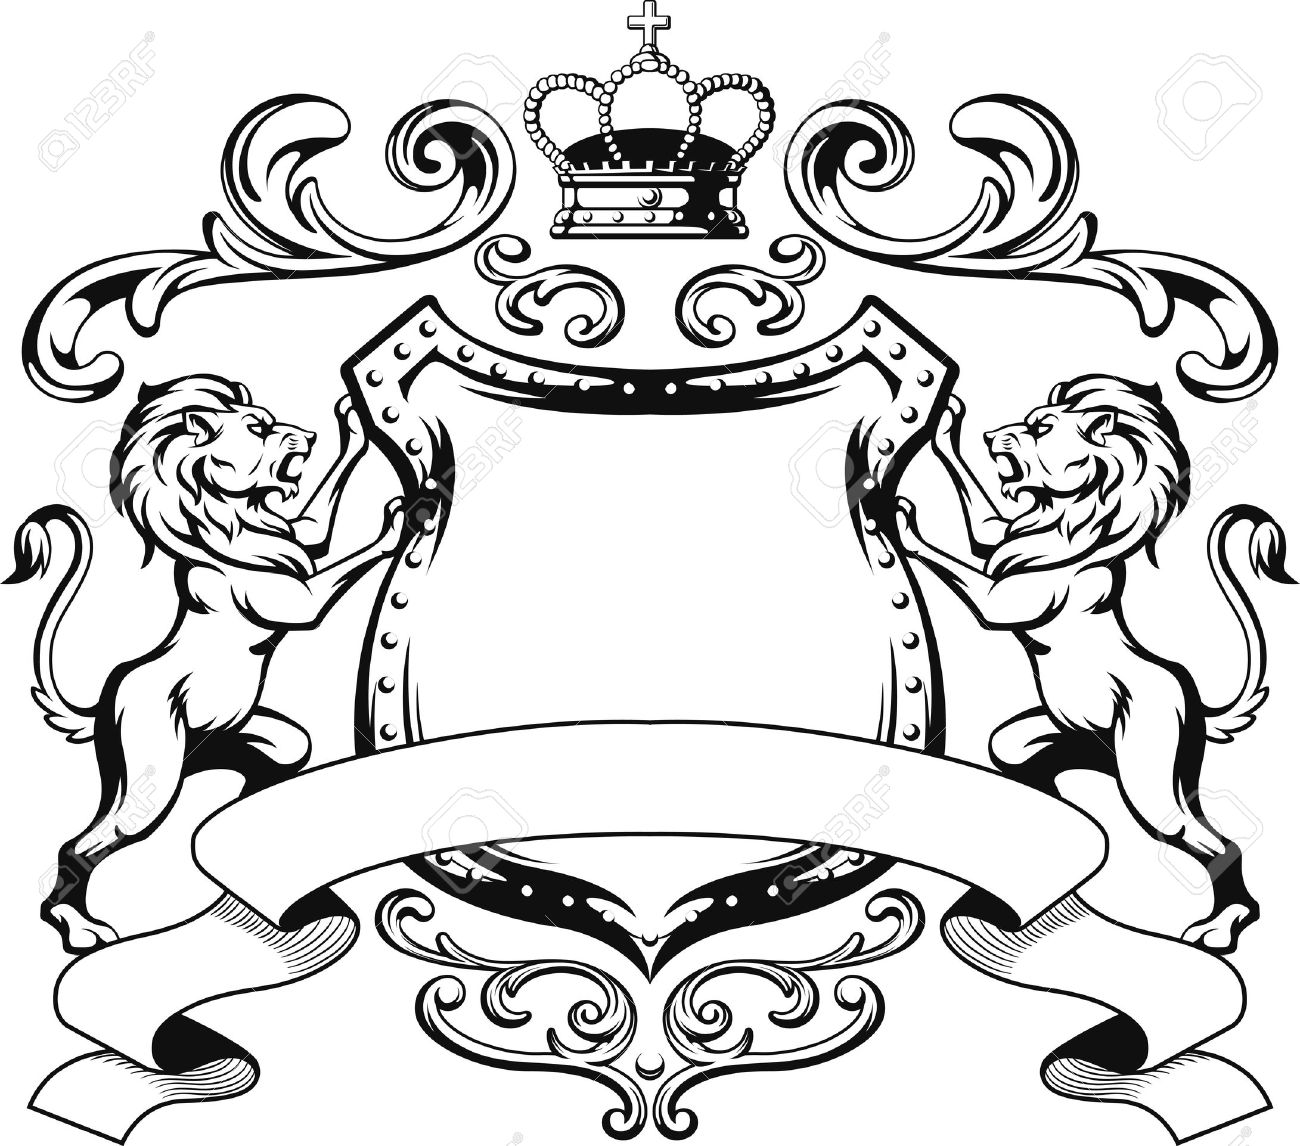 Heraldic Lion Shield Crest Silhouette.